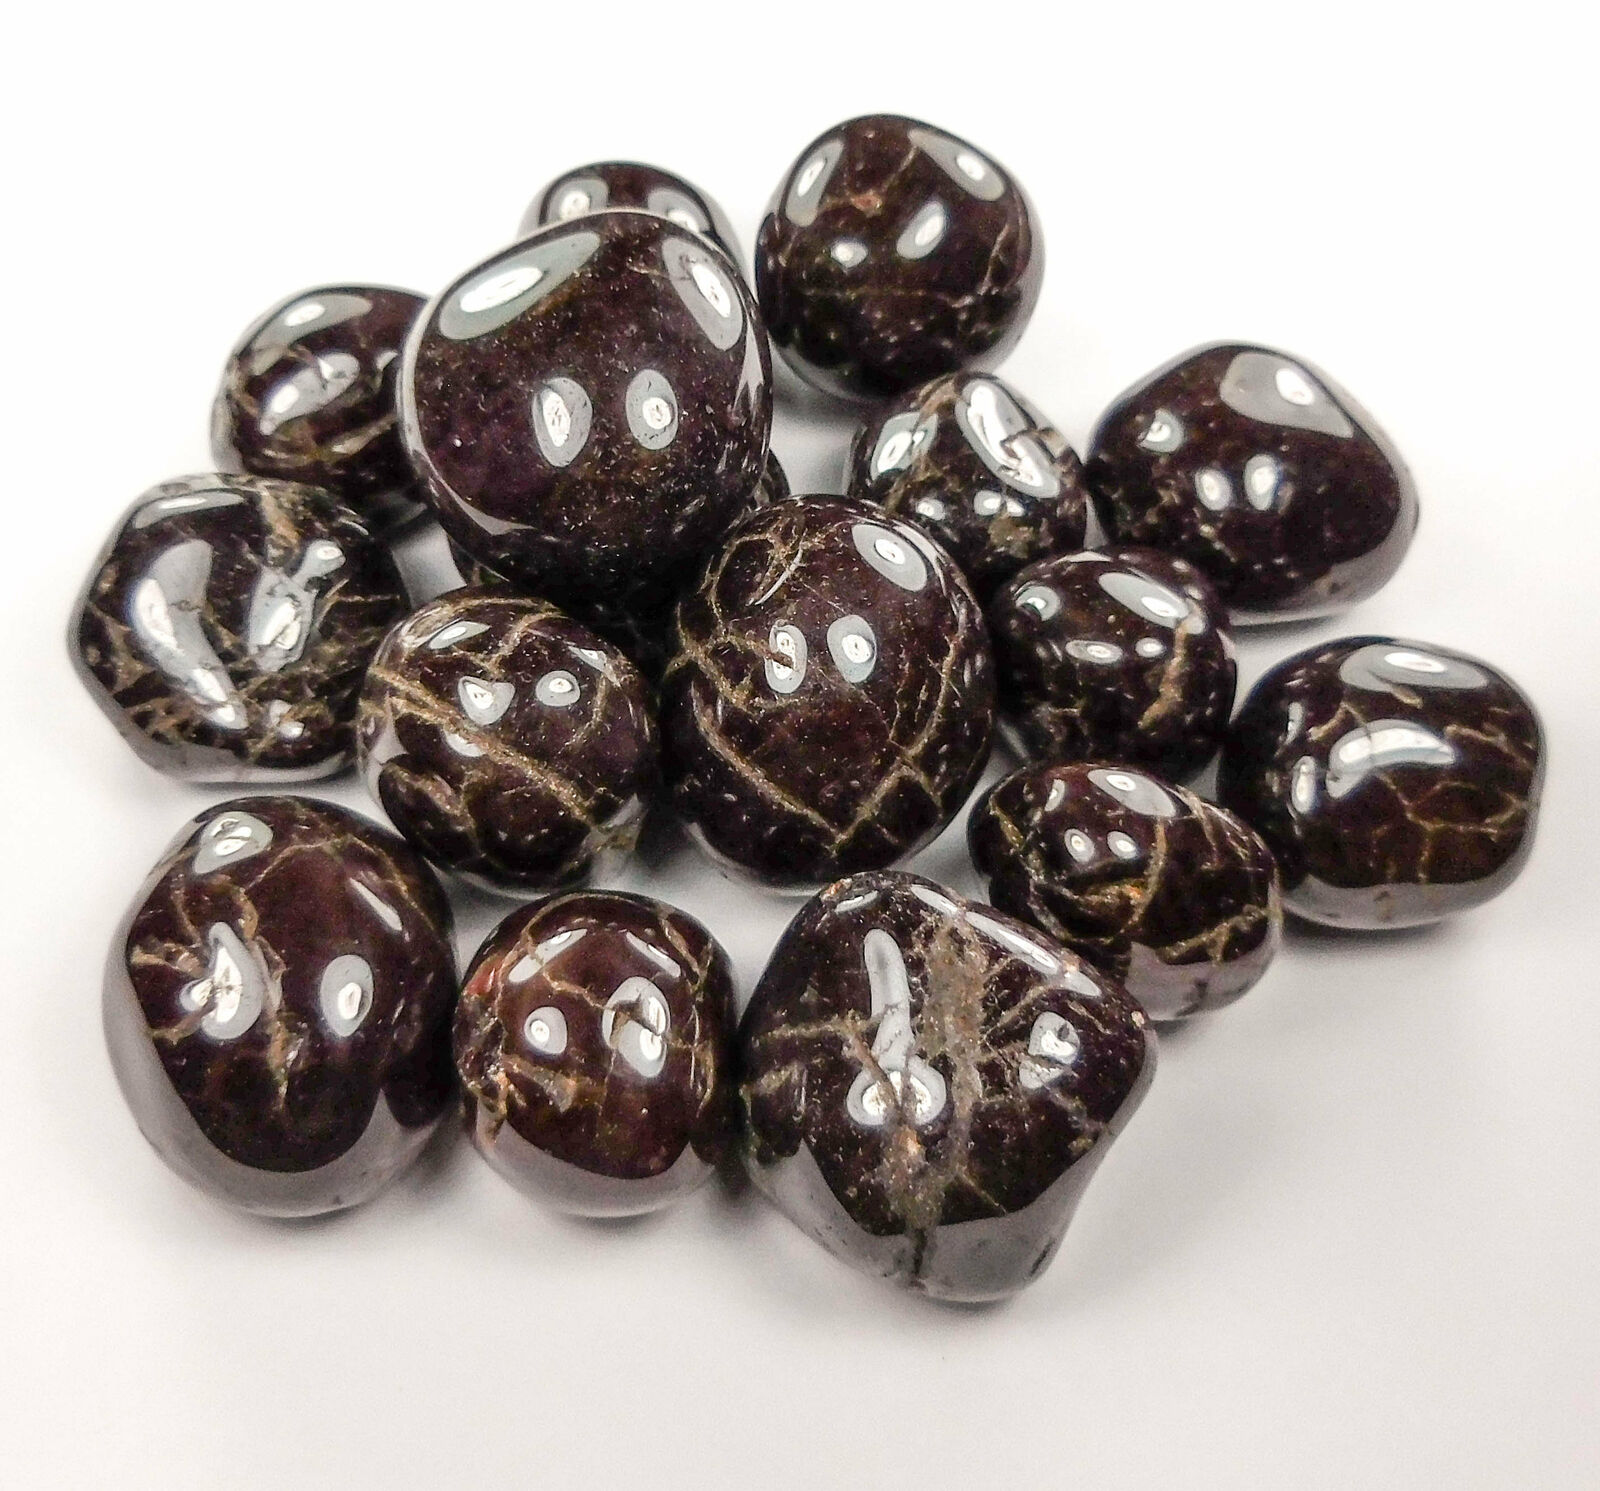 Bulk Wholesale Lot 1 Kilo ( 2.2 LBs ) - Cherry Garnet - Tumbled Polished Stones